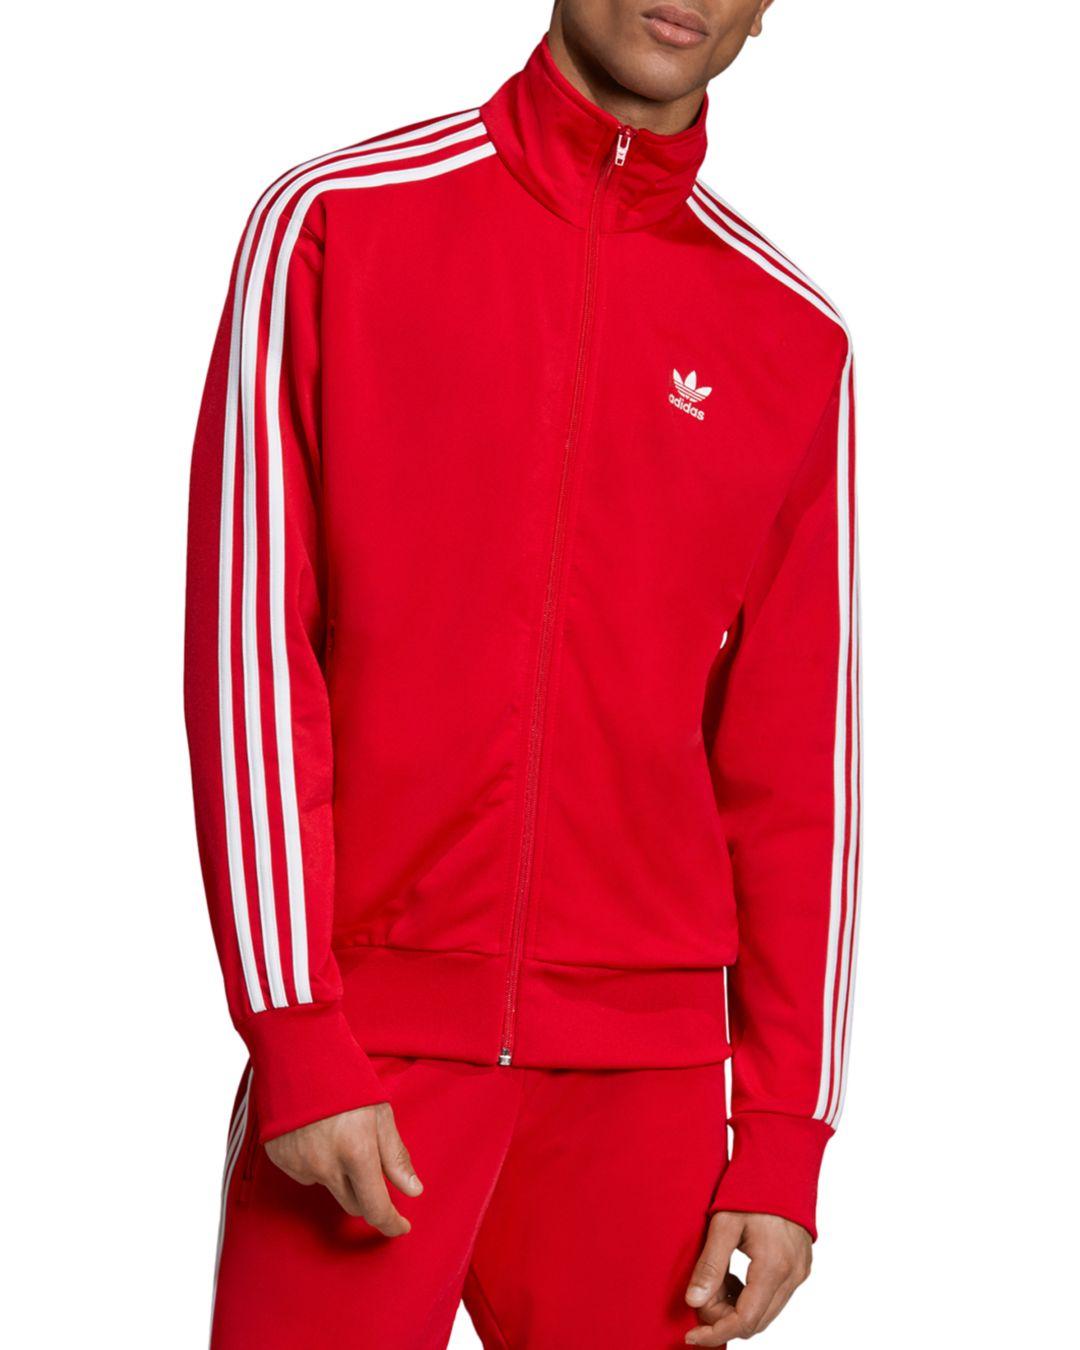 adidas Originals Firebird Tricot Track Jacket in Scarlet (Red) for Men -  Lyst